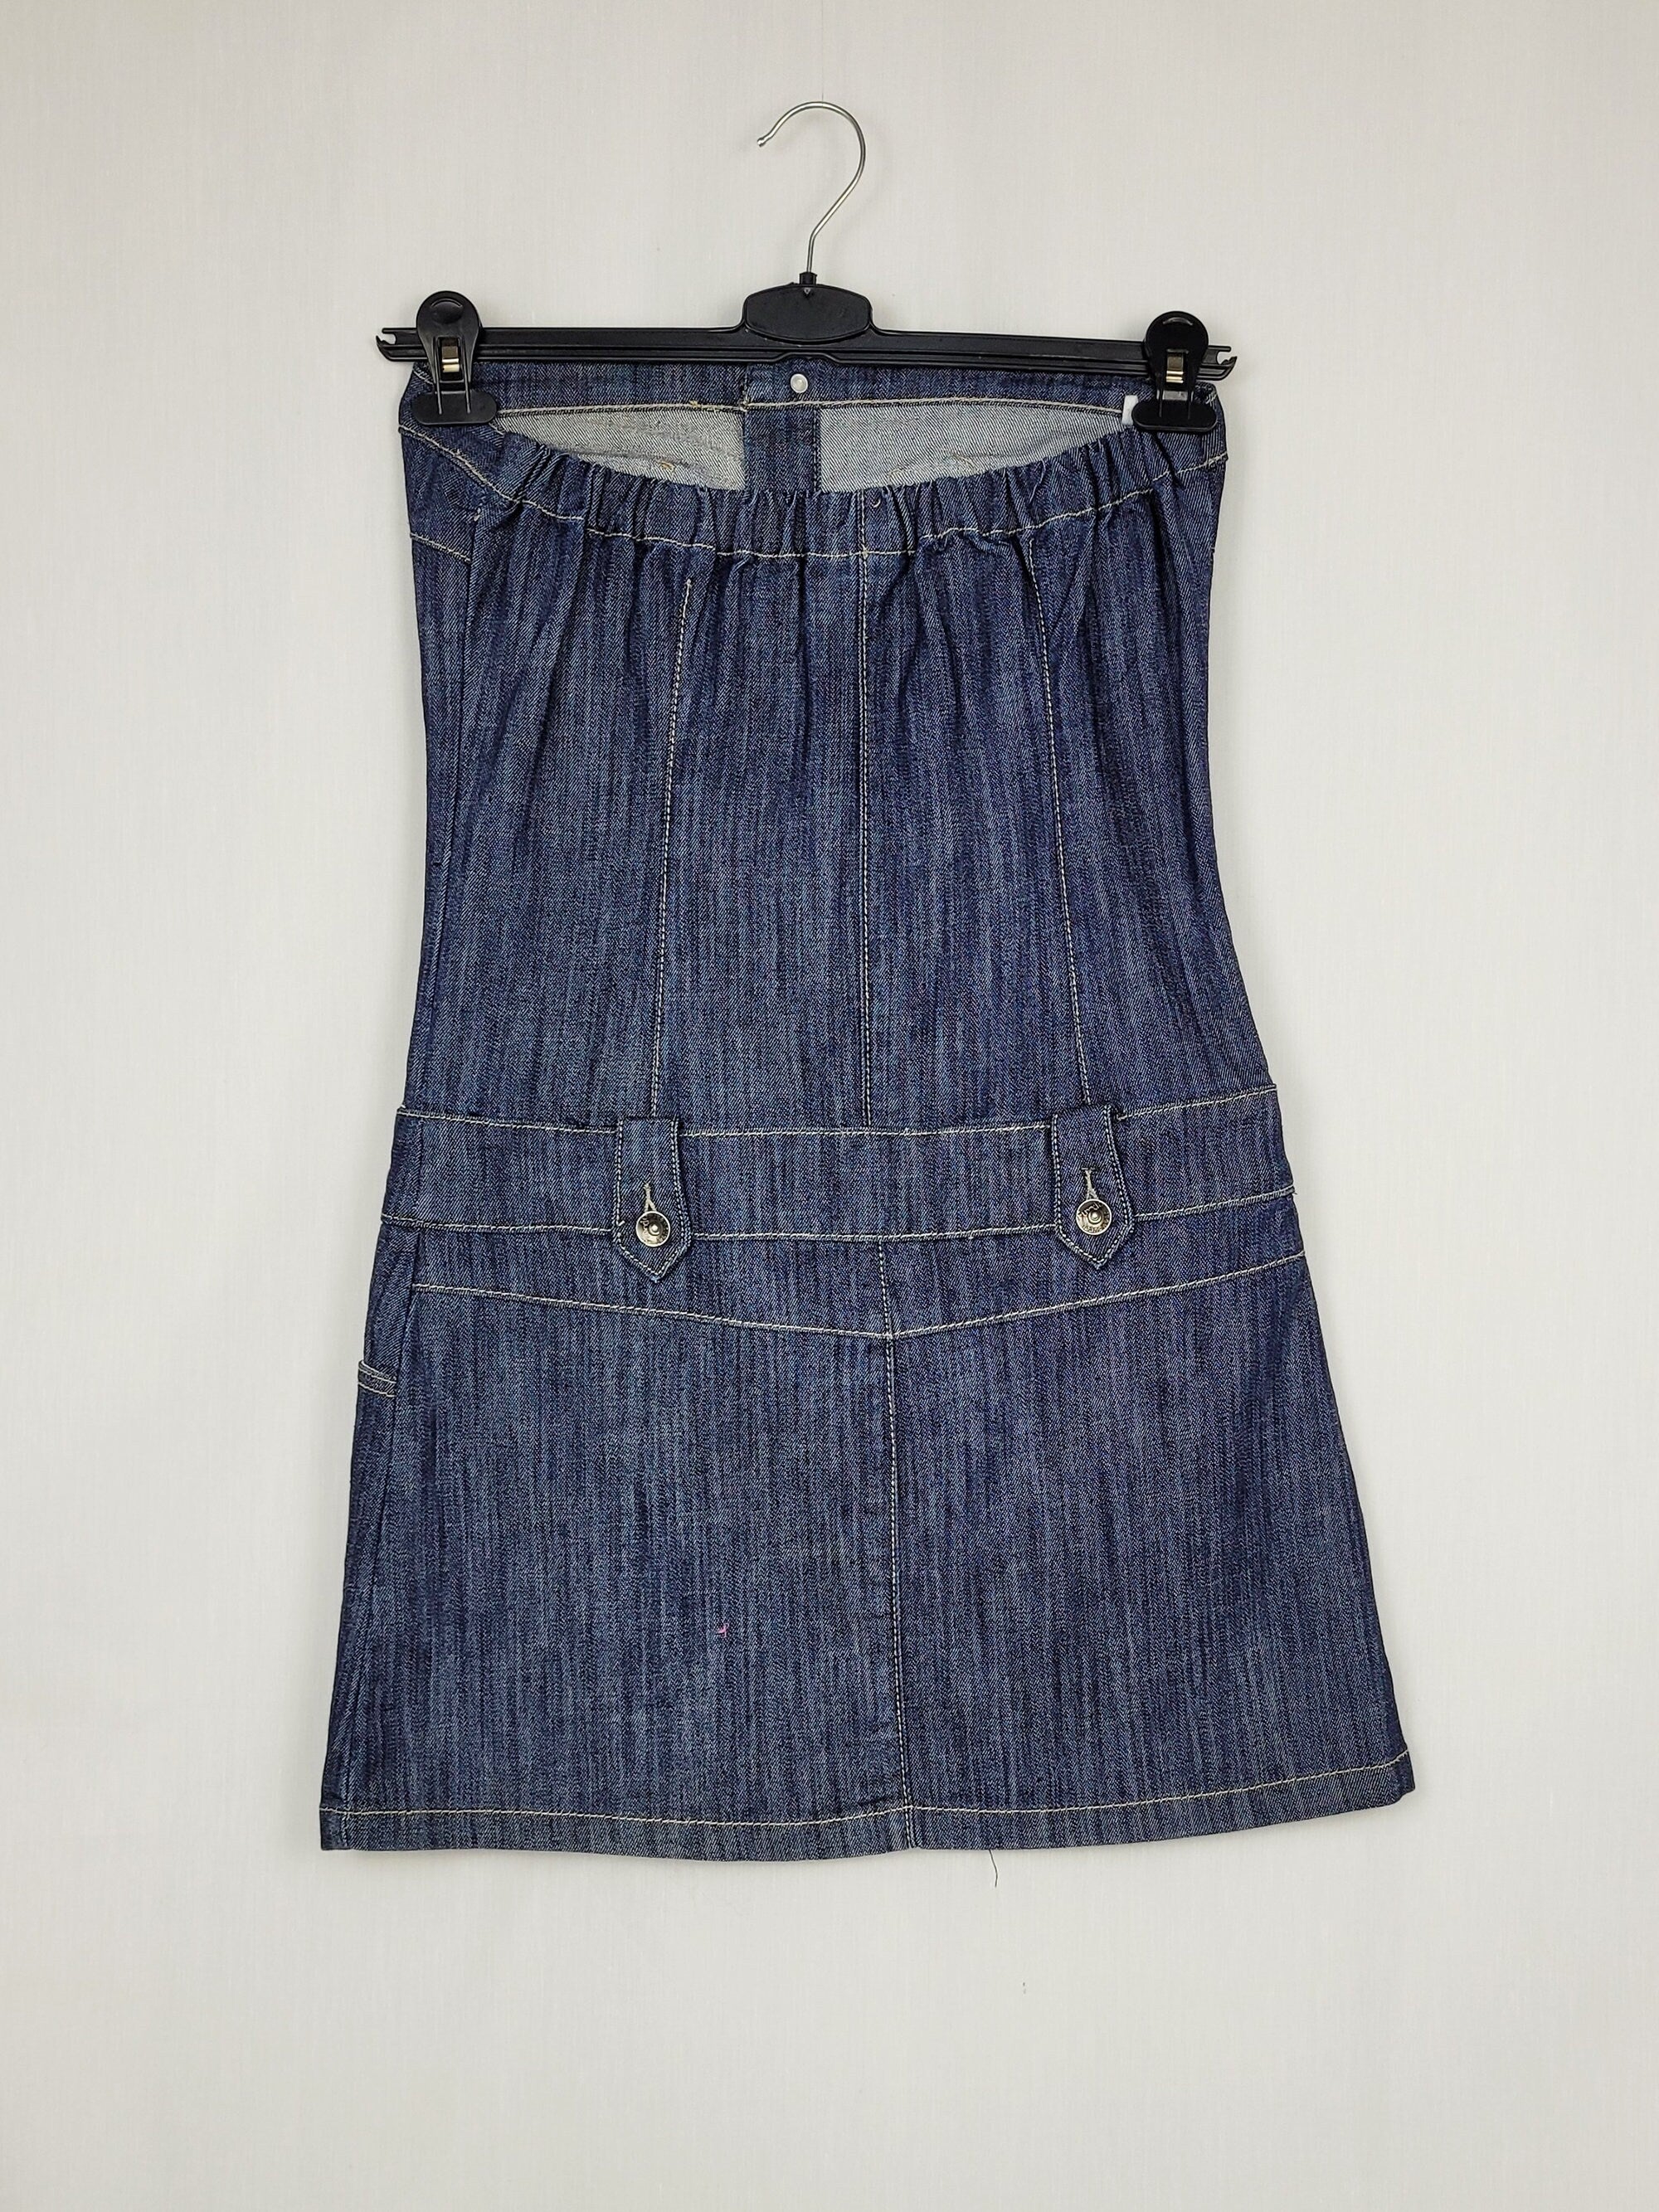 Vintage 90s bandeau sleeveless blue denim button front dress